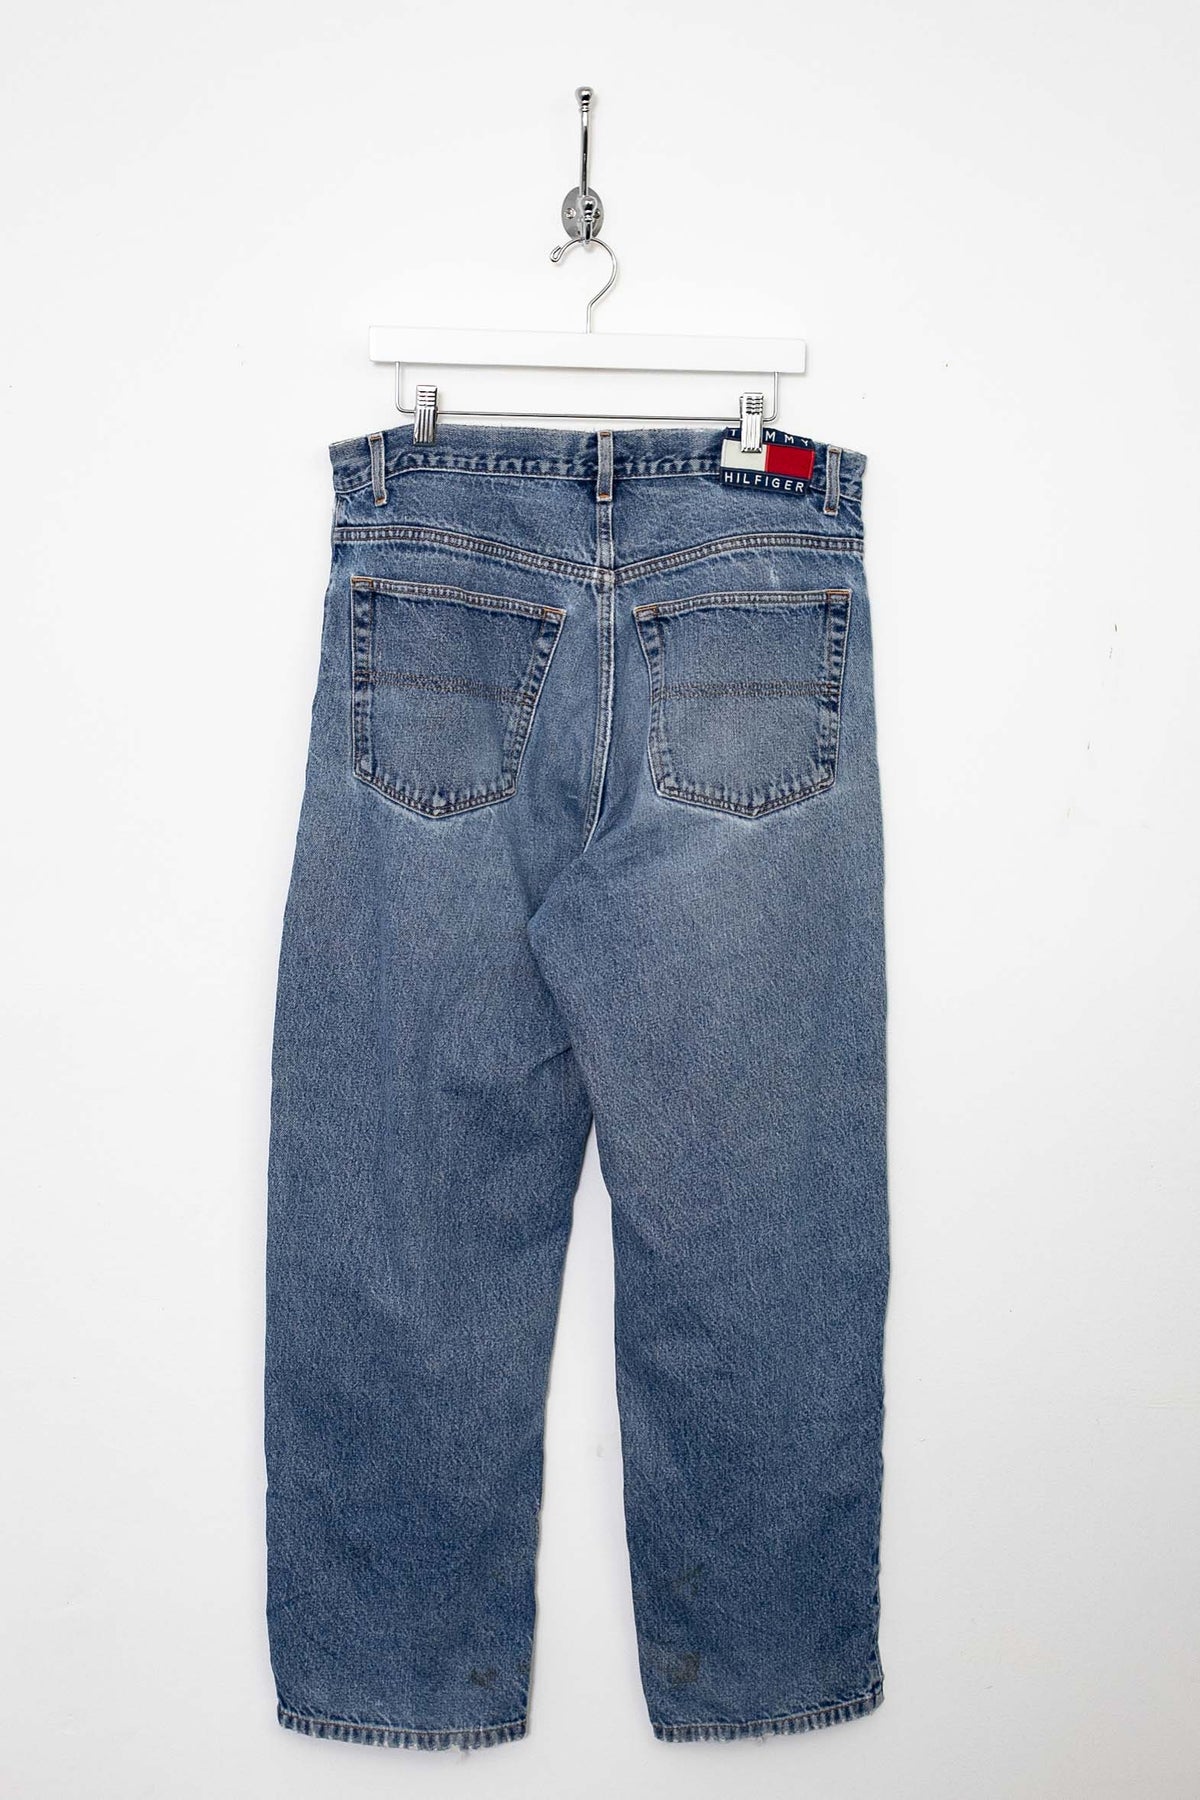 00s Tommy Hilfiger Jeans (L)